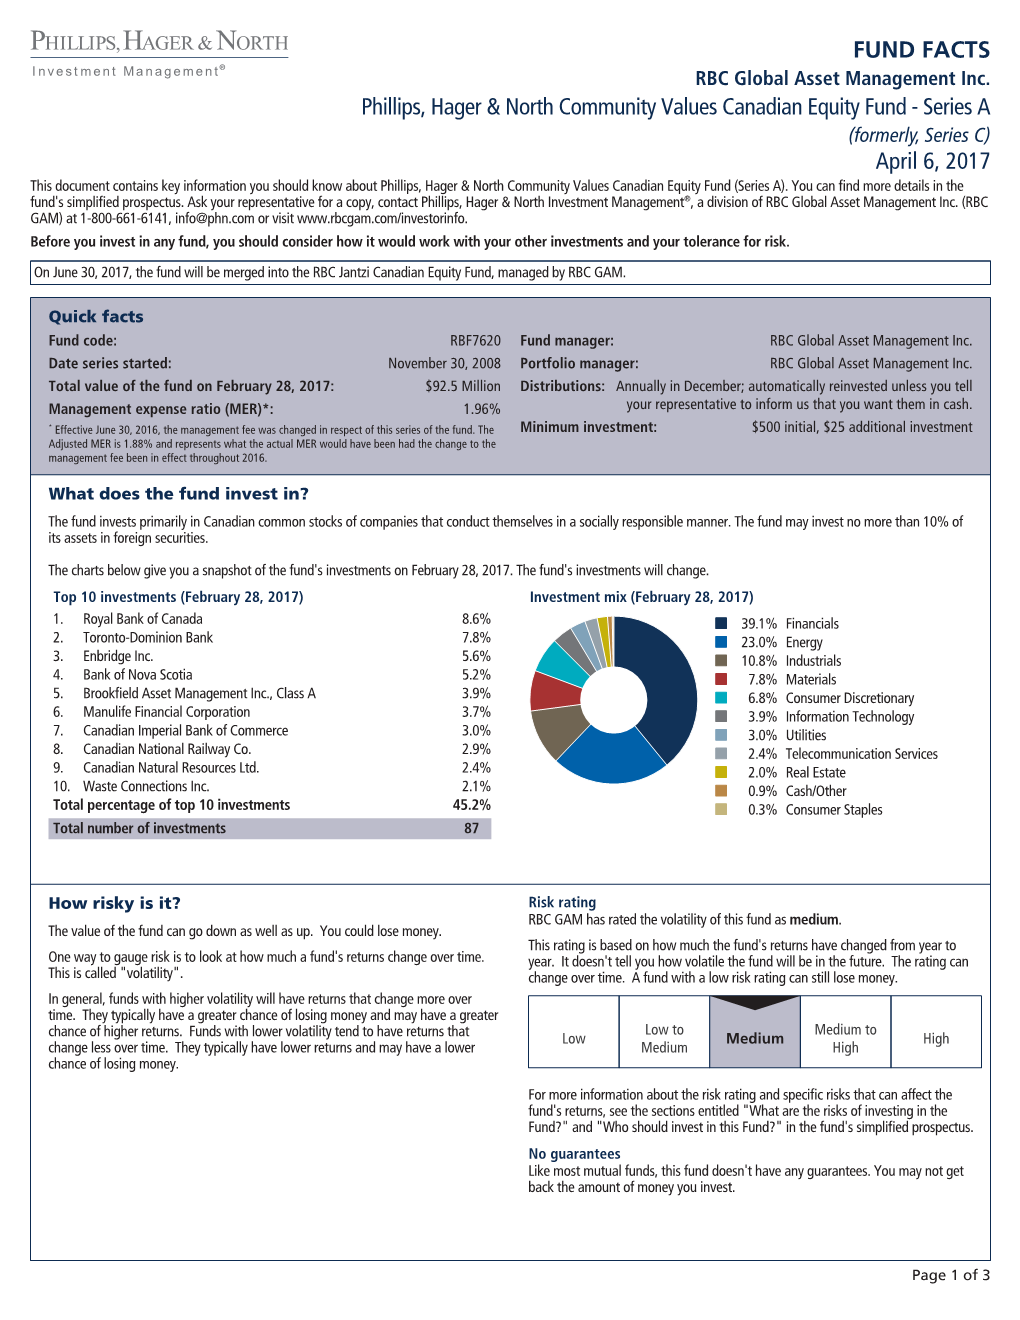 FUND FACTS RBC Global Asset Management Inc